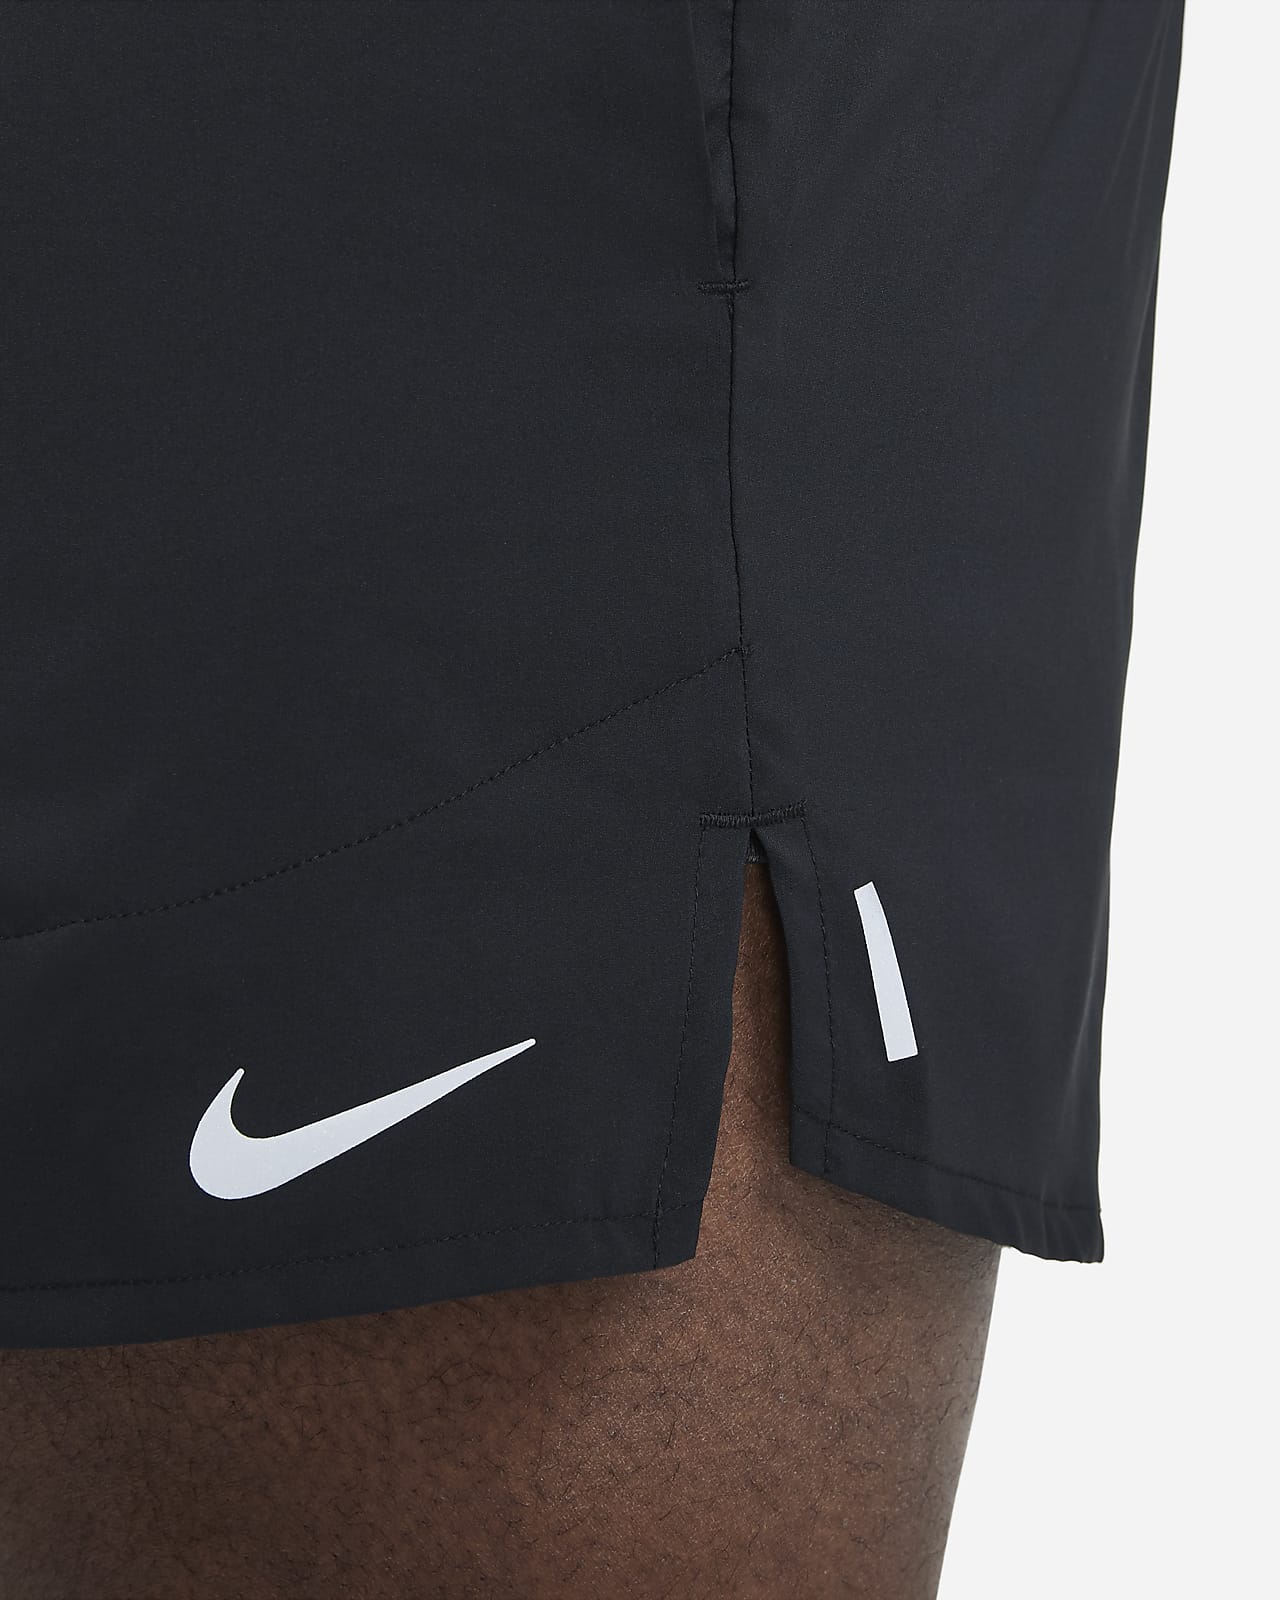 Nike Flex Stride Men's 5" Running Shorts. Nike.com